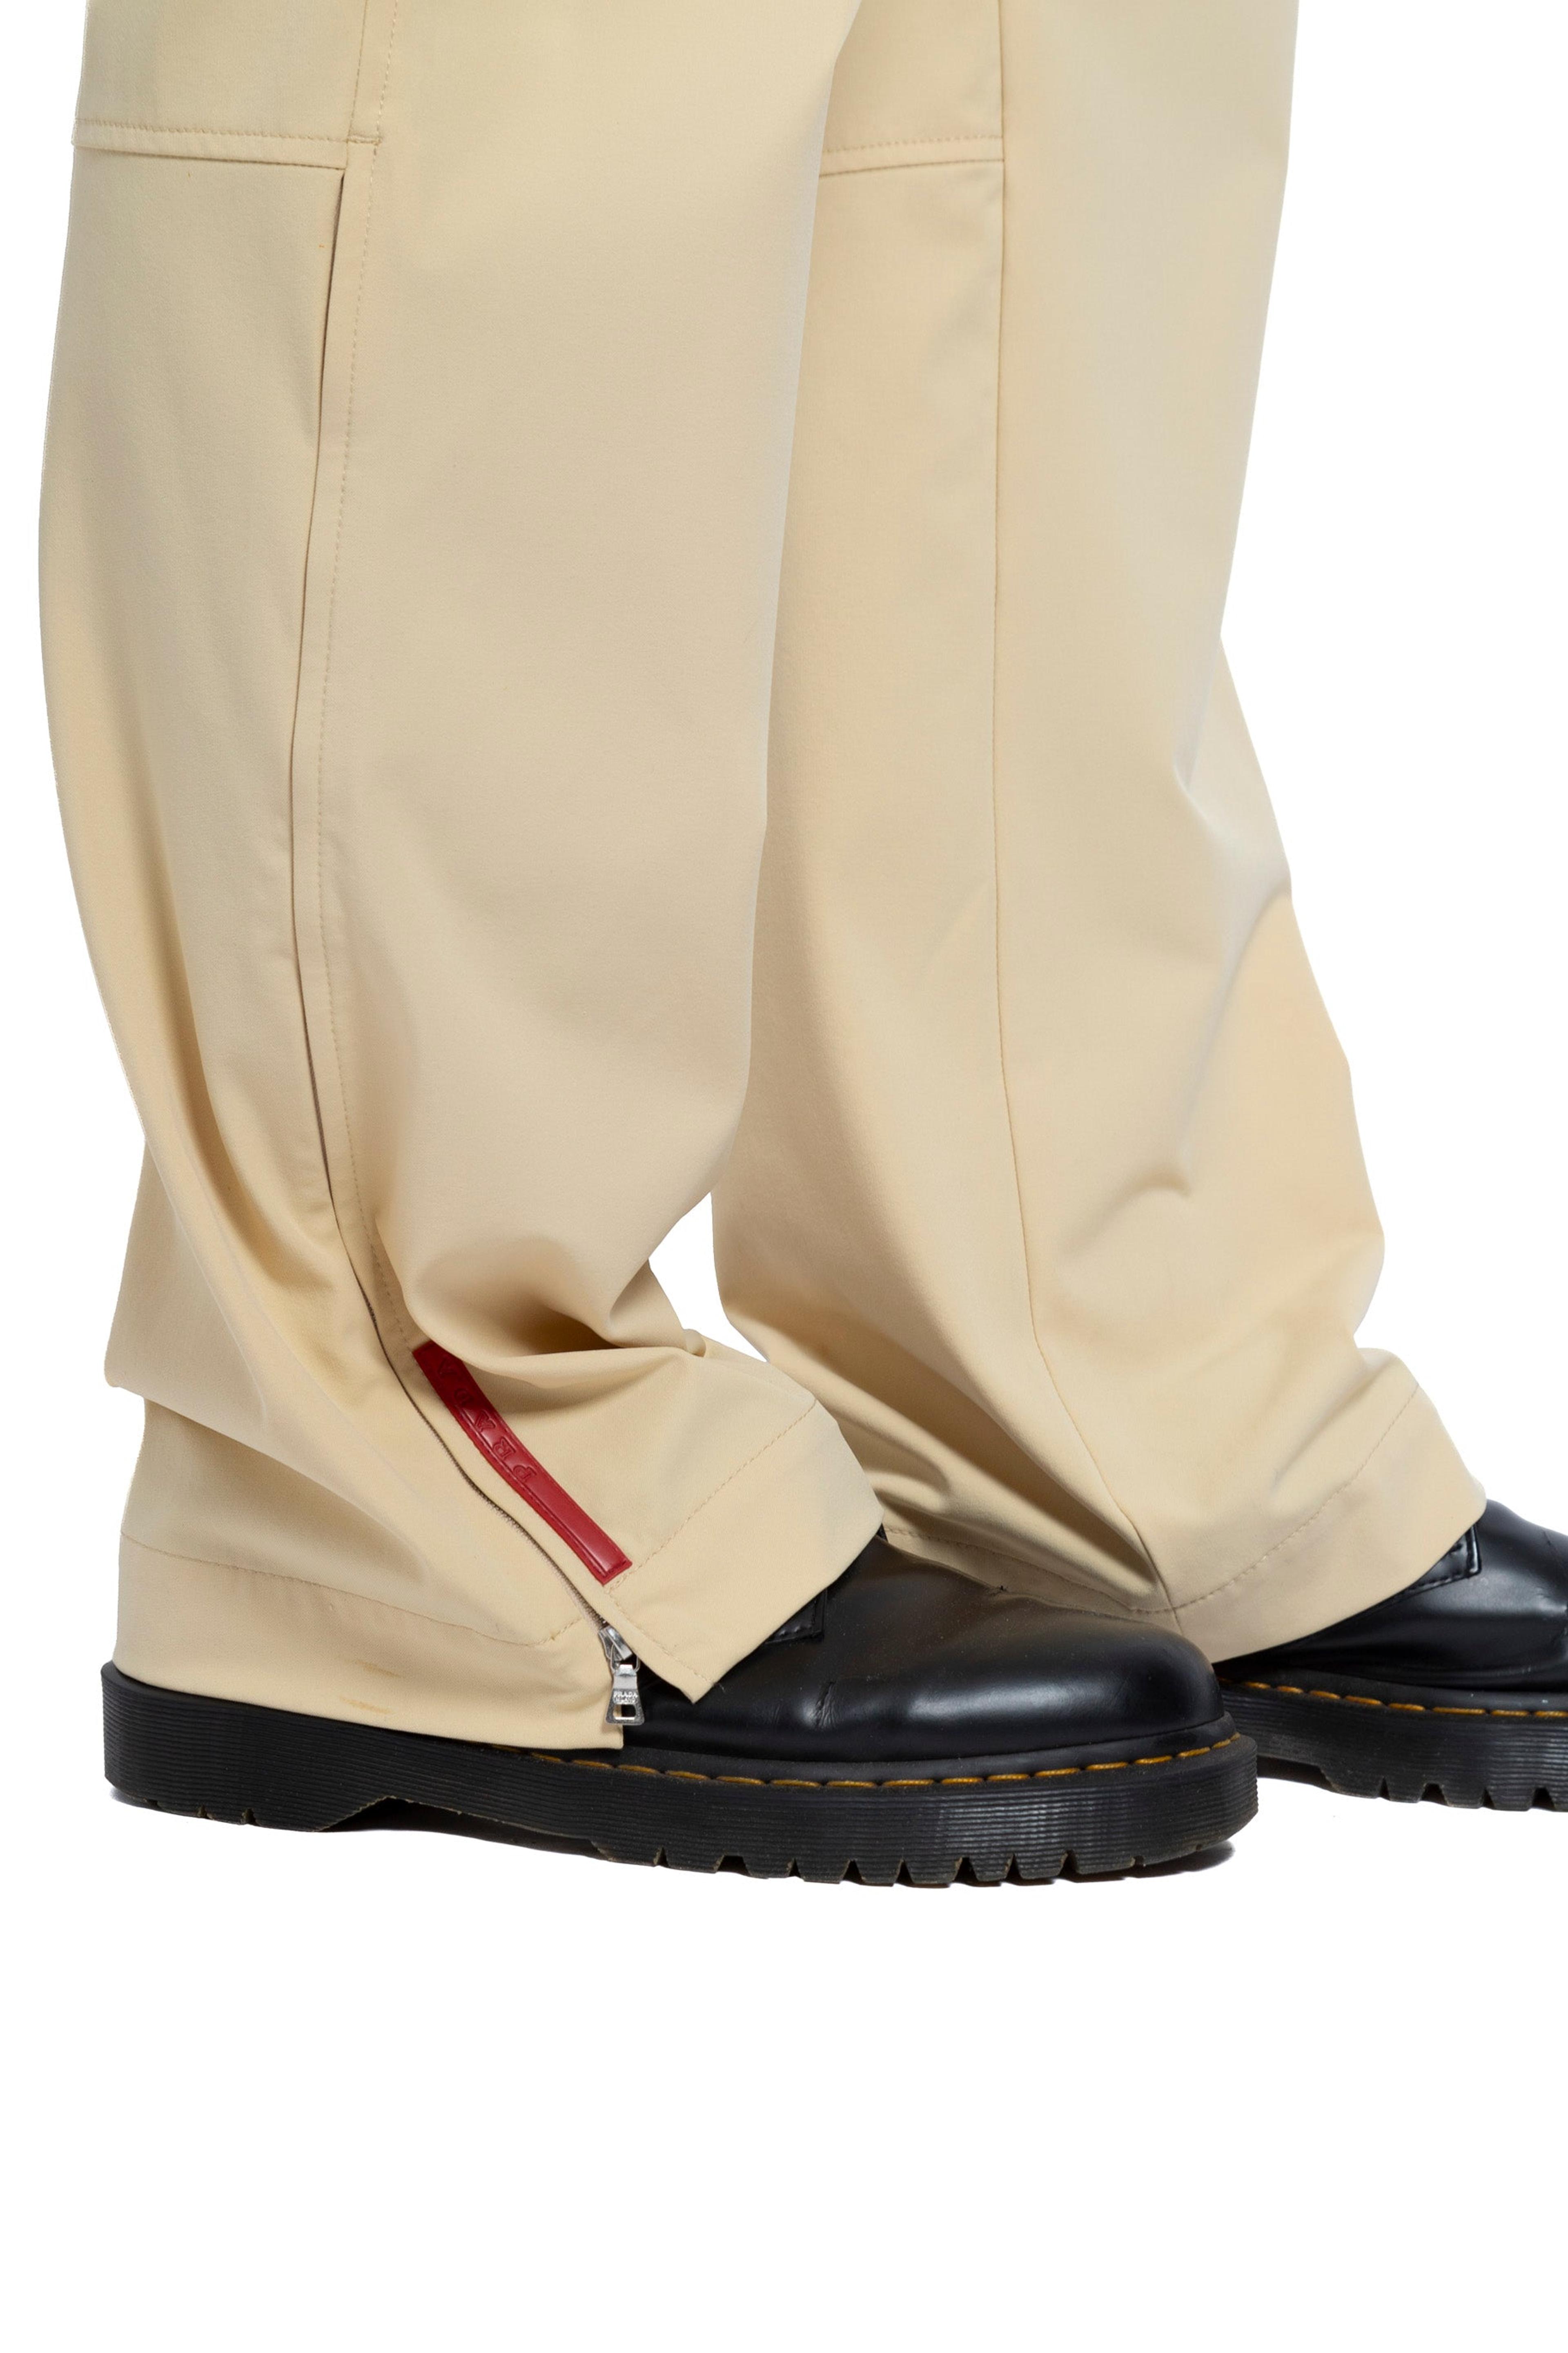 Alternate View 2 of Prada Zip Detail Tech Trousers